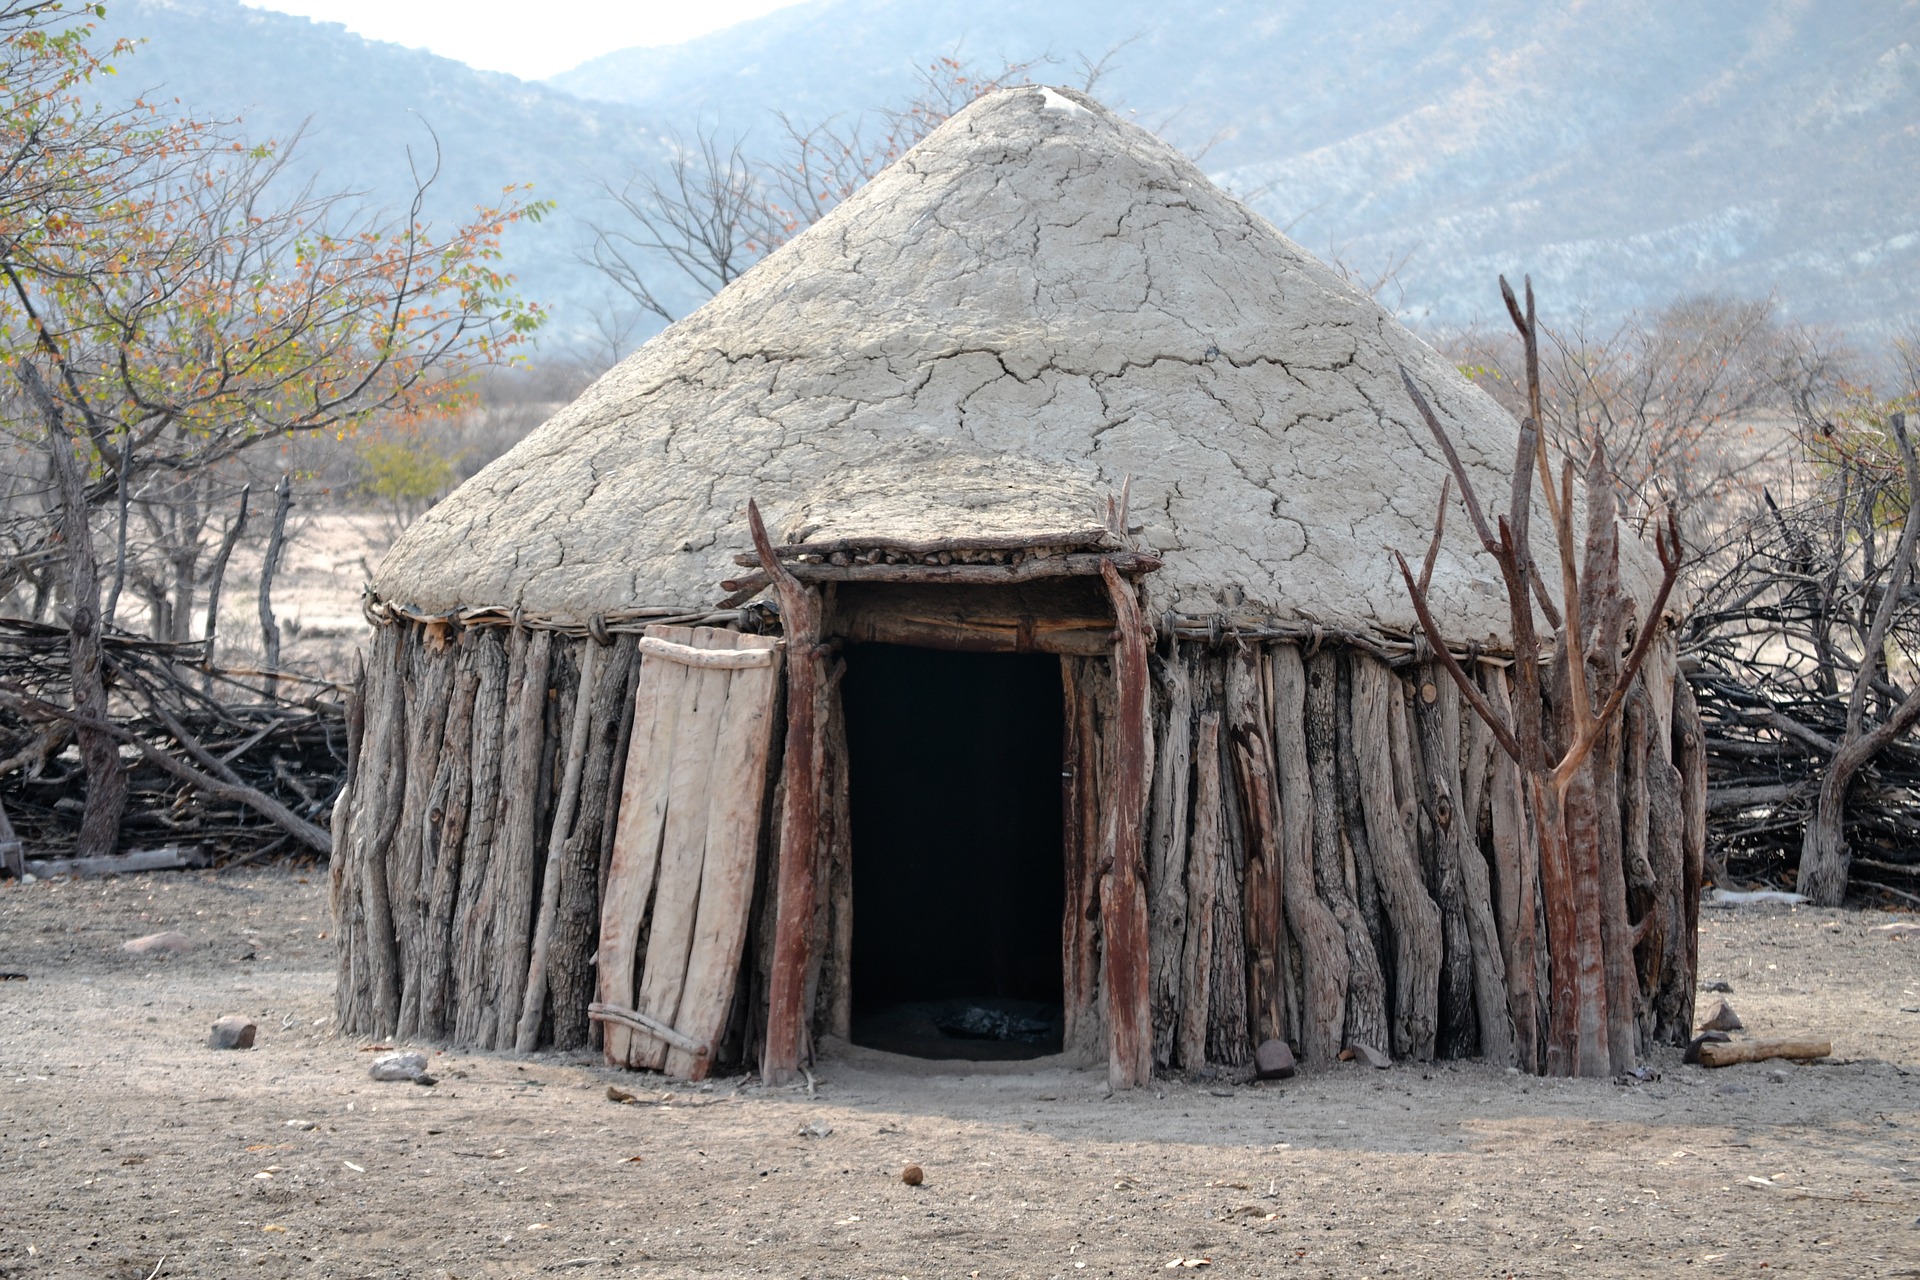 Хижина жилище племен Африки